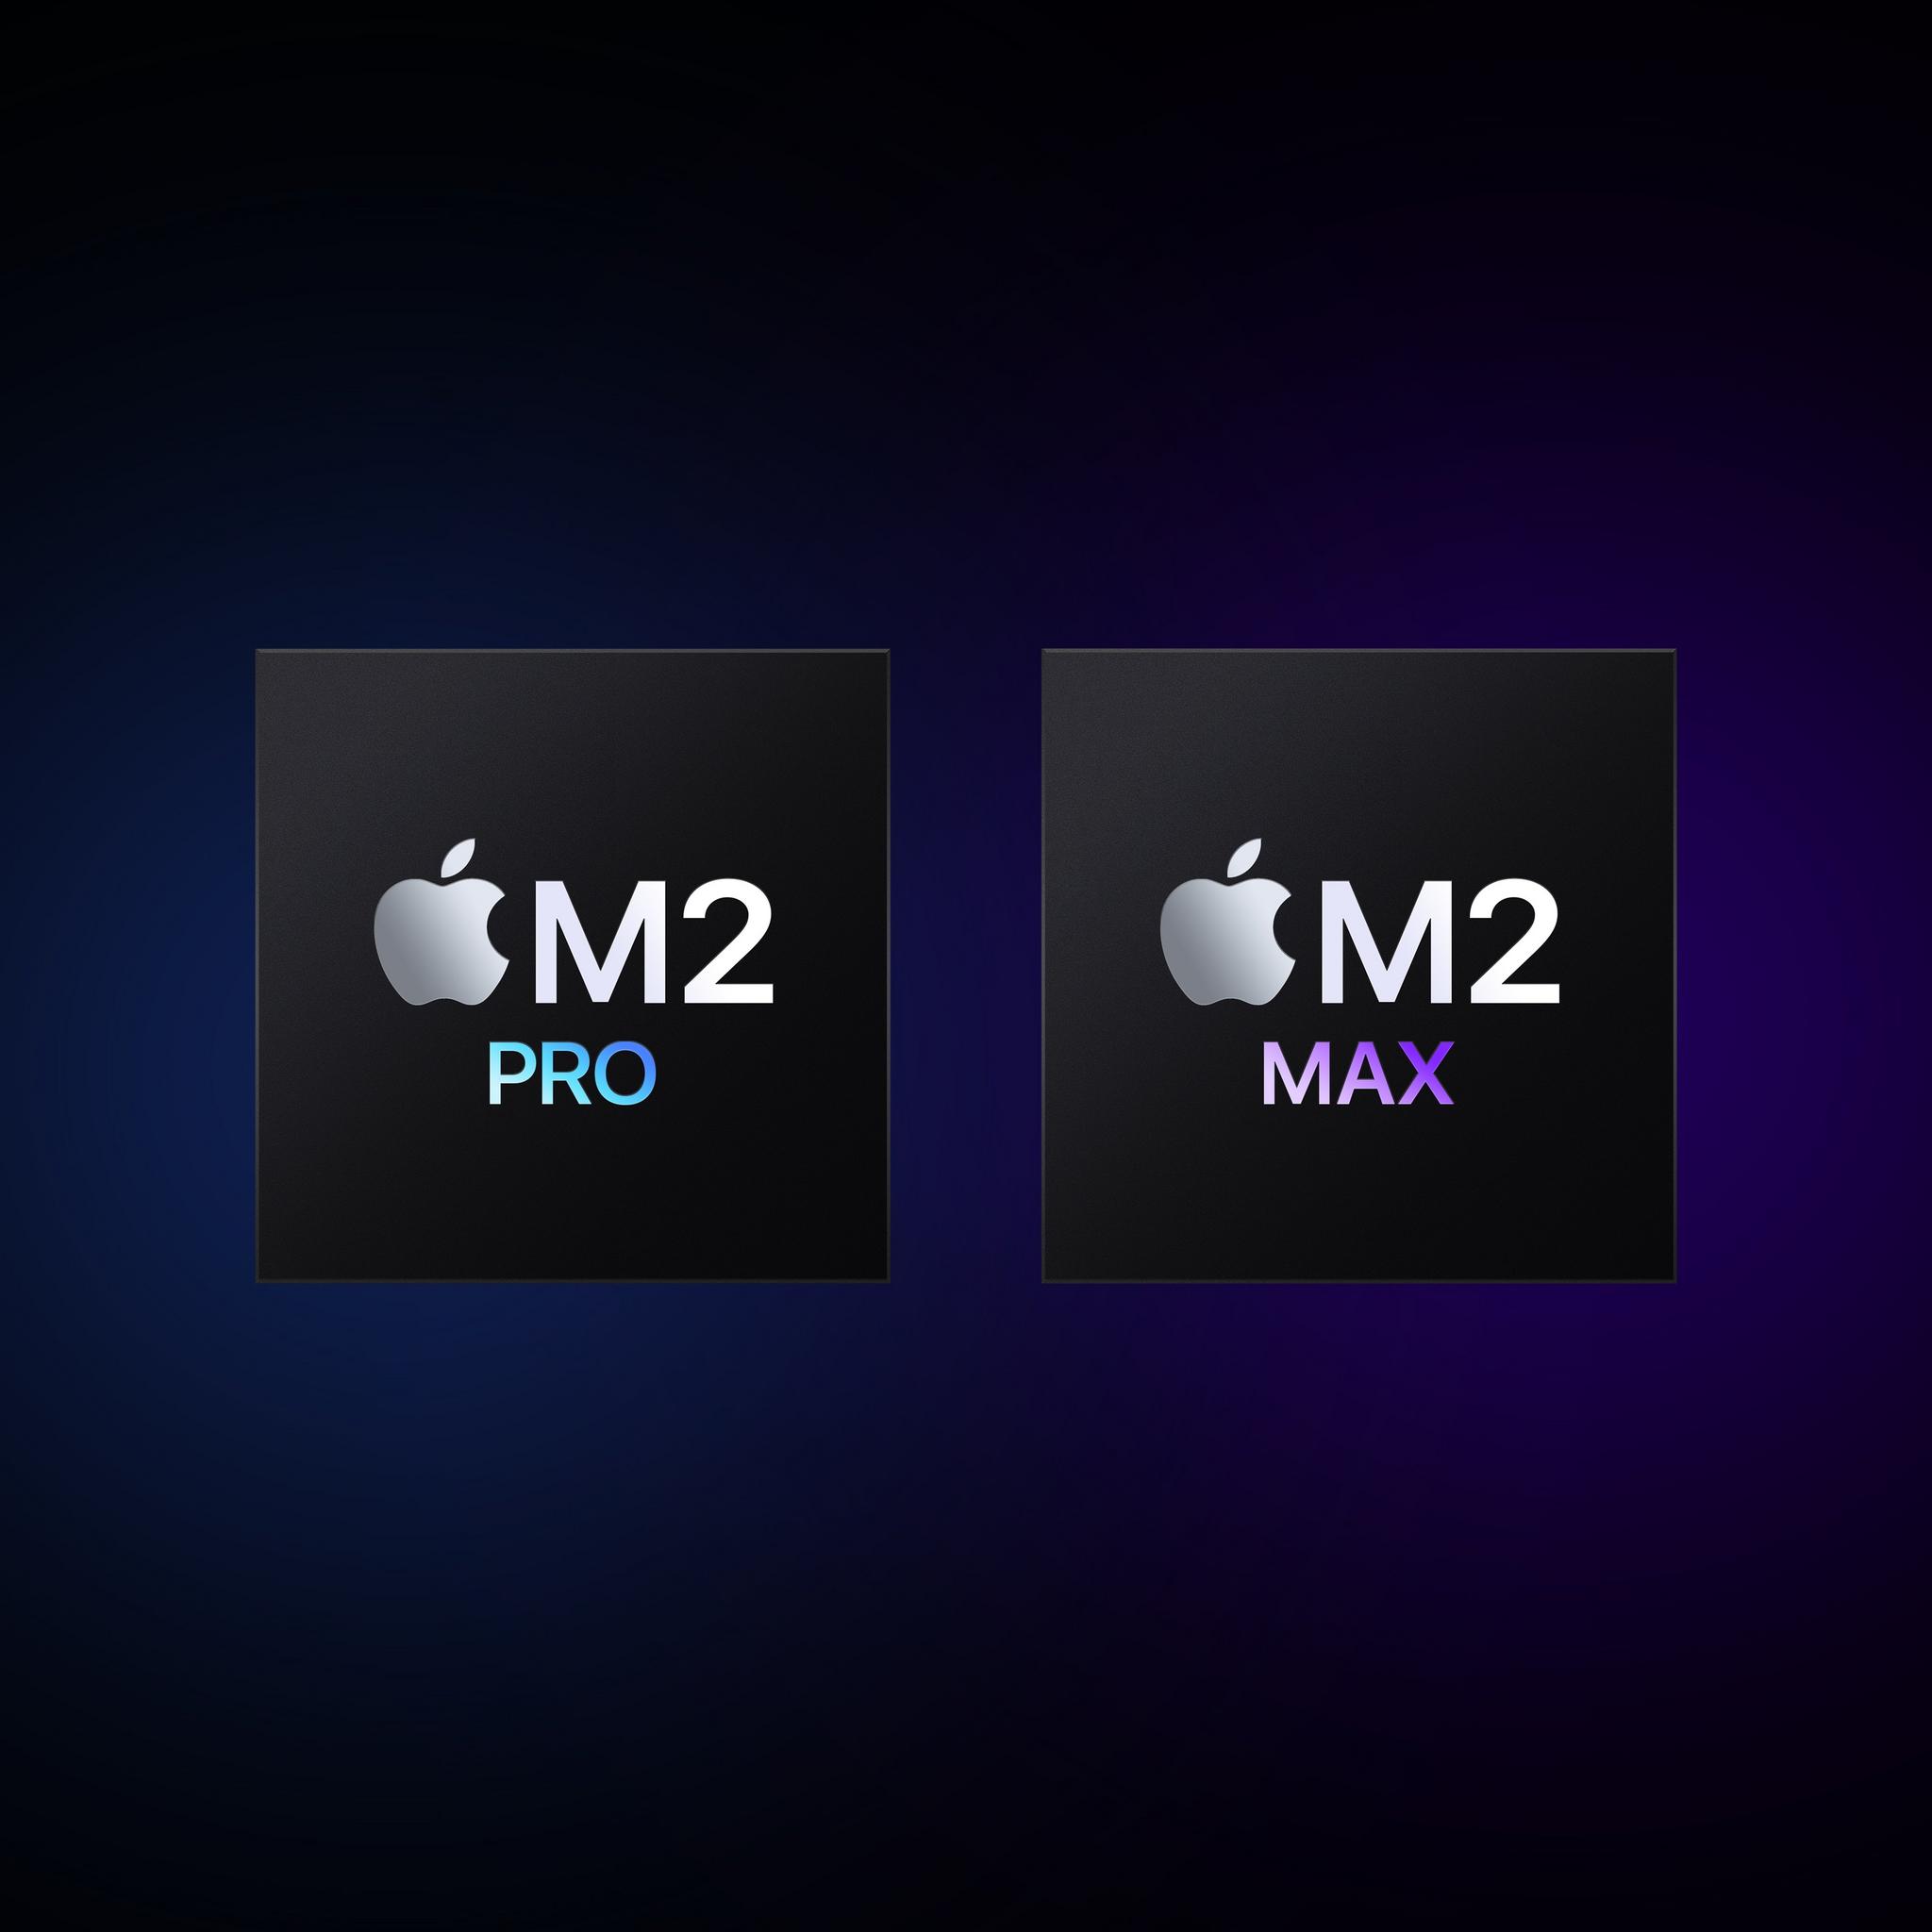 Apple MacBook Pro M2 Pro, 16GB RAM, 512GB SSD, 16-inch Laptop - Space Grey